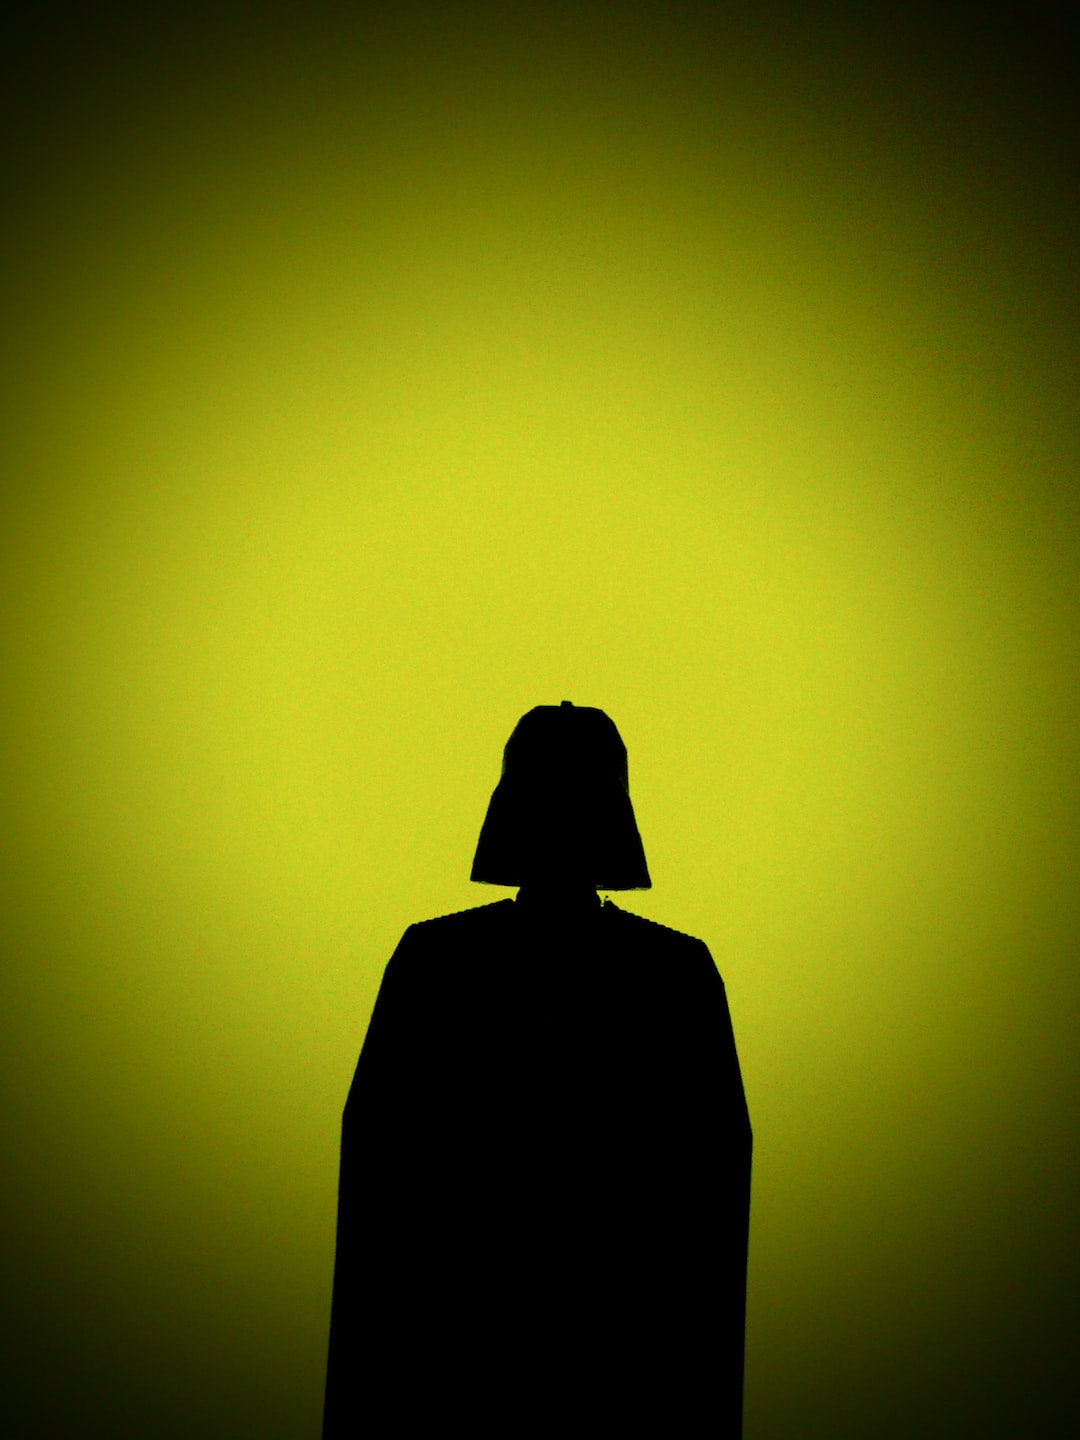 Darth Vader silhouette